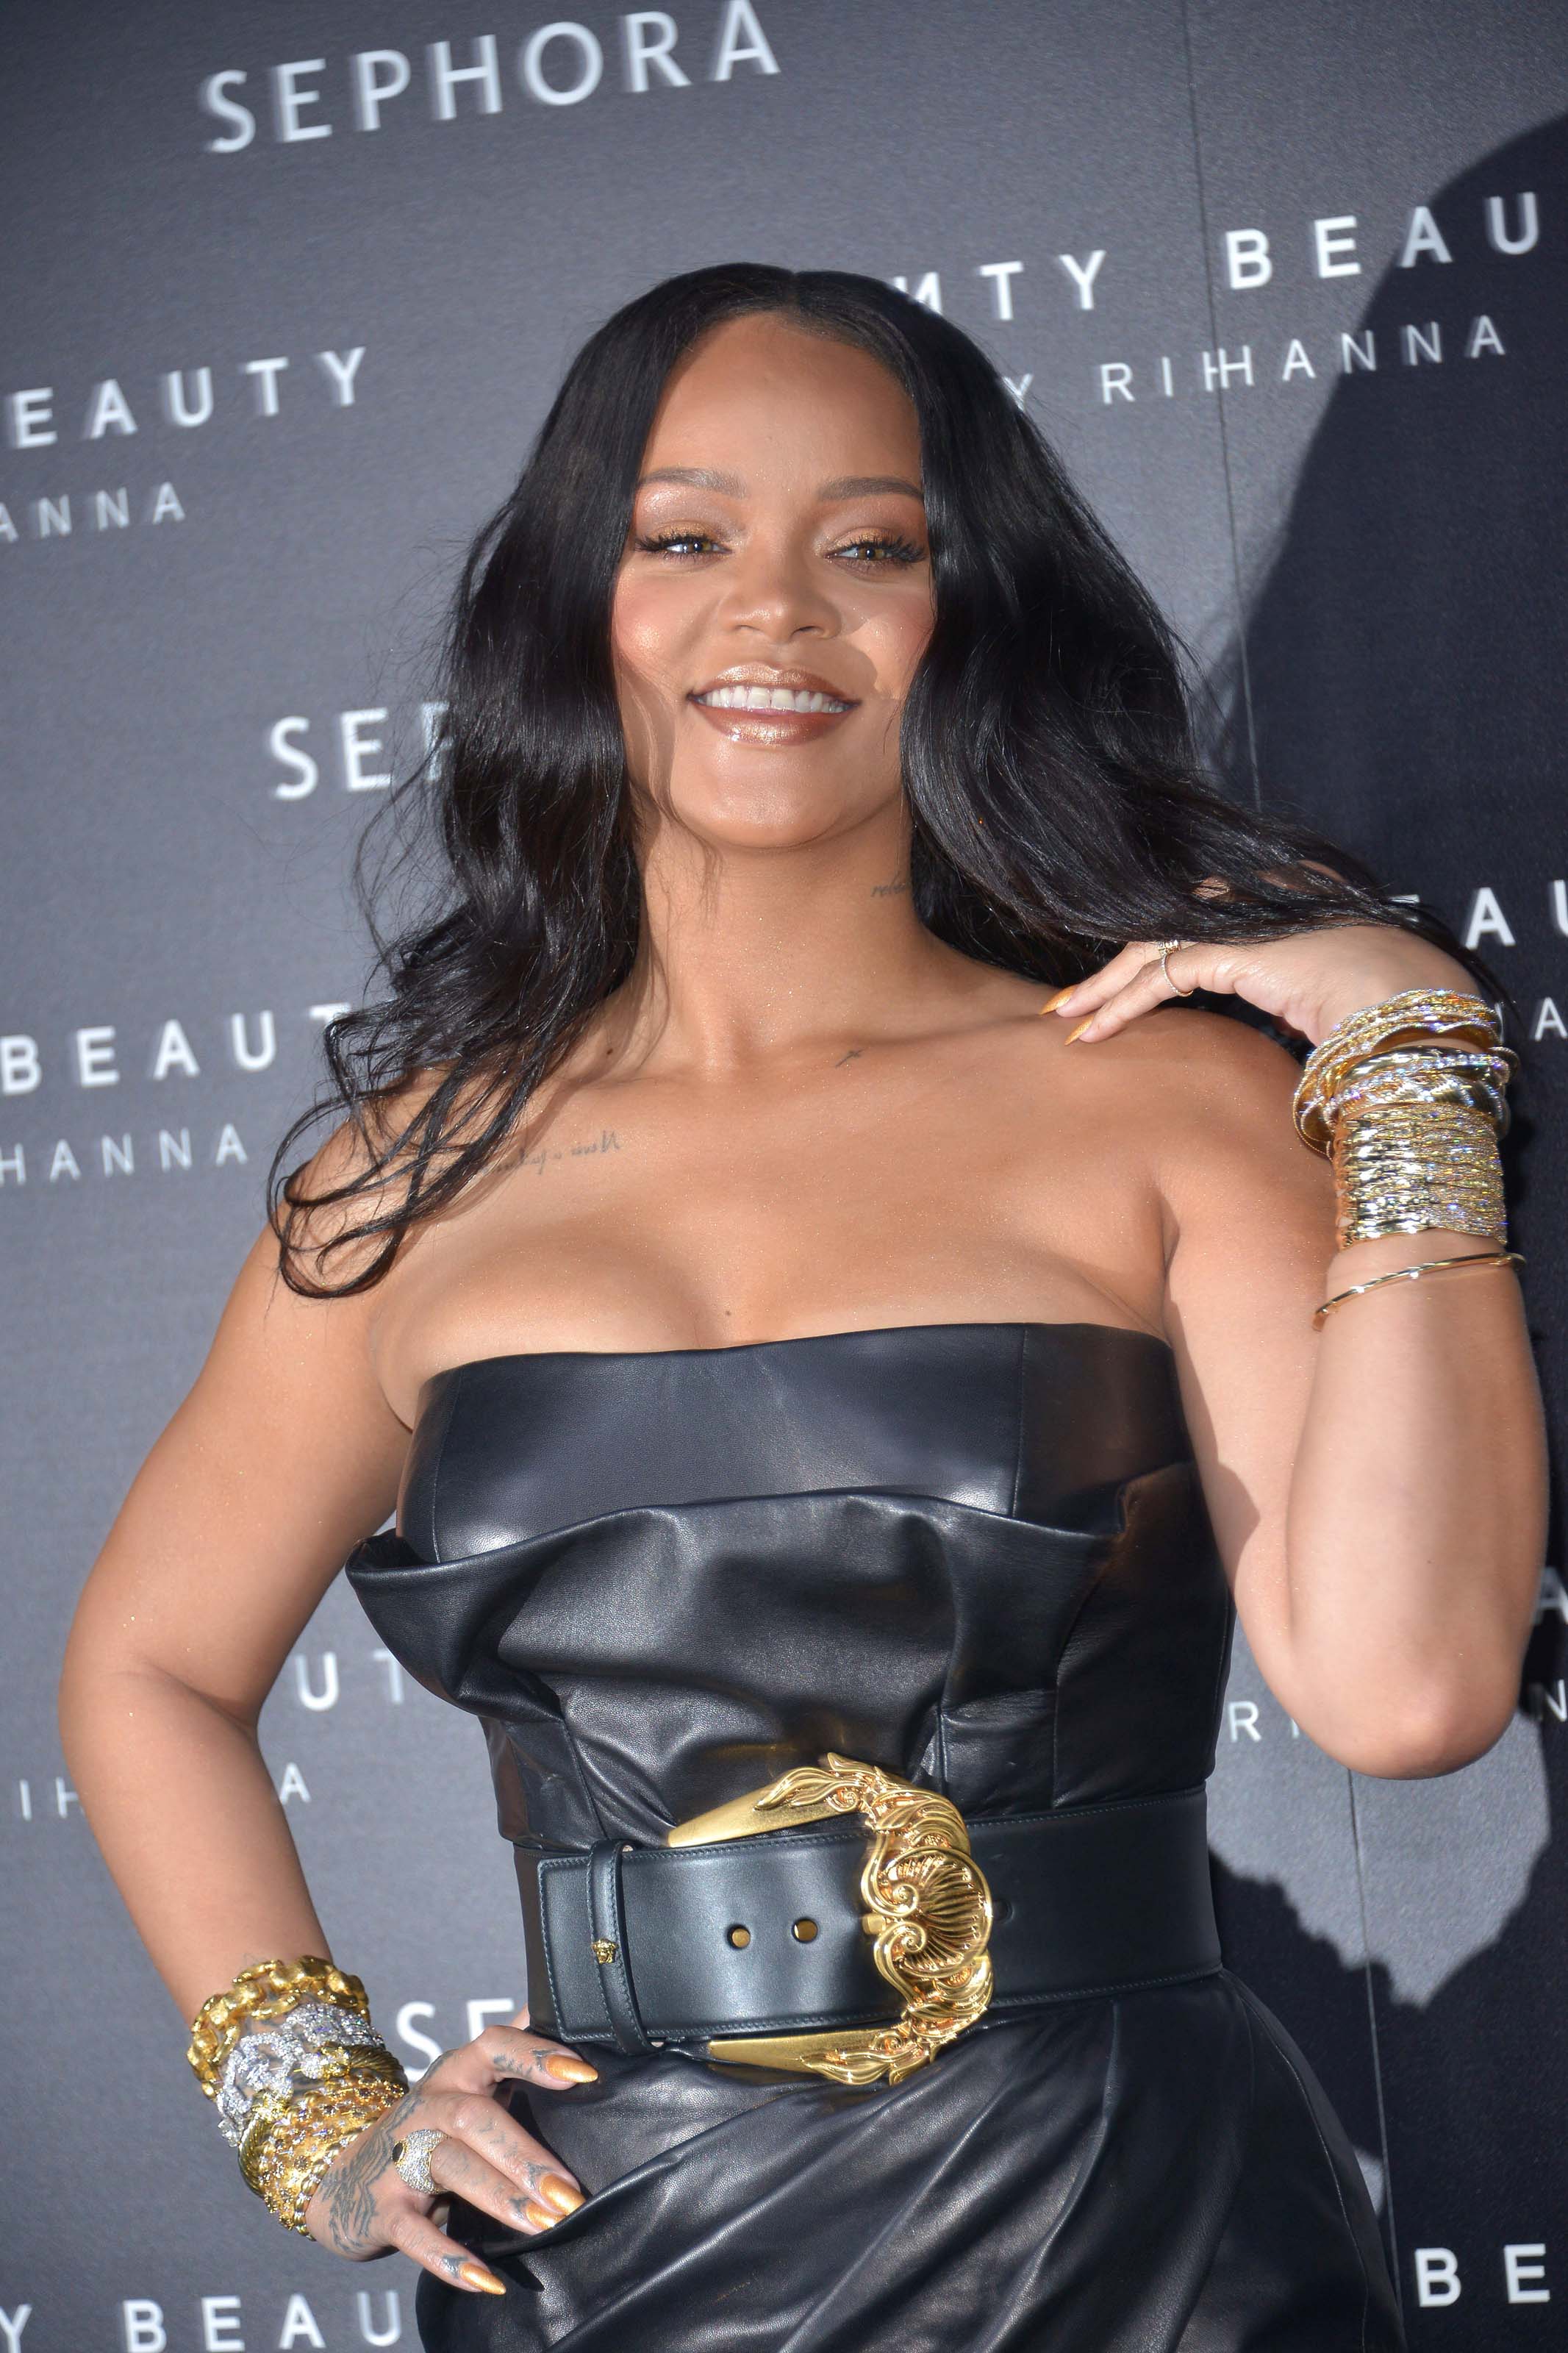 Rihanna at the launch of make-up “Fenty beauty” line